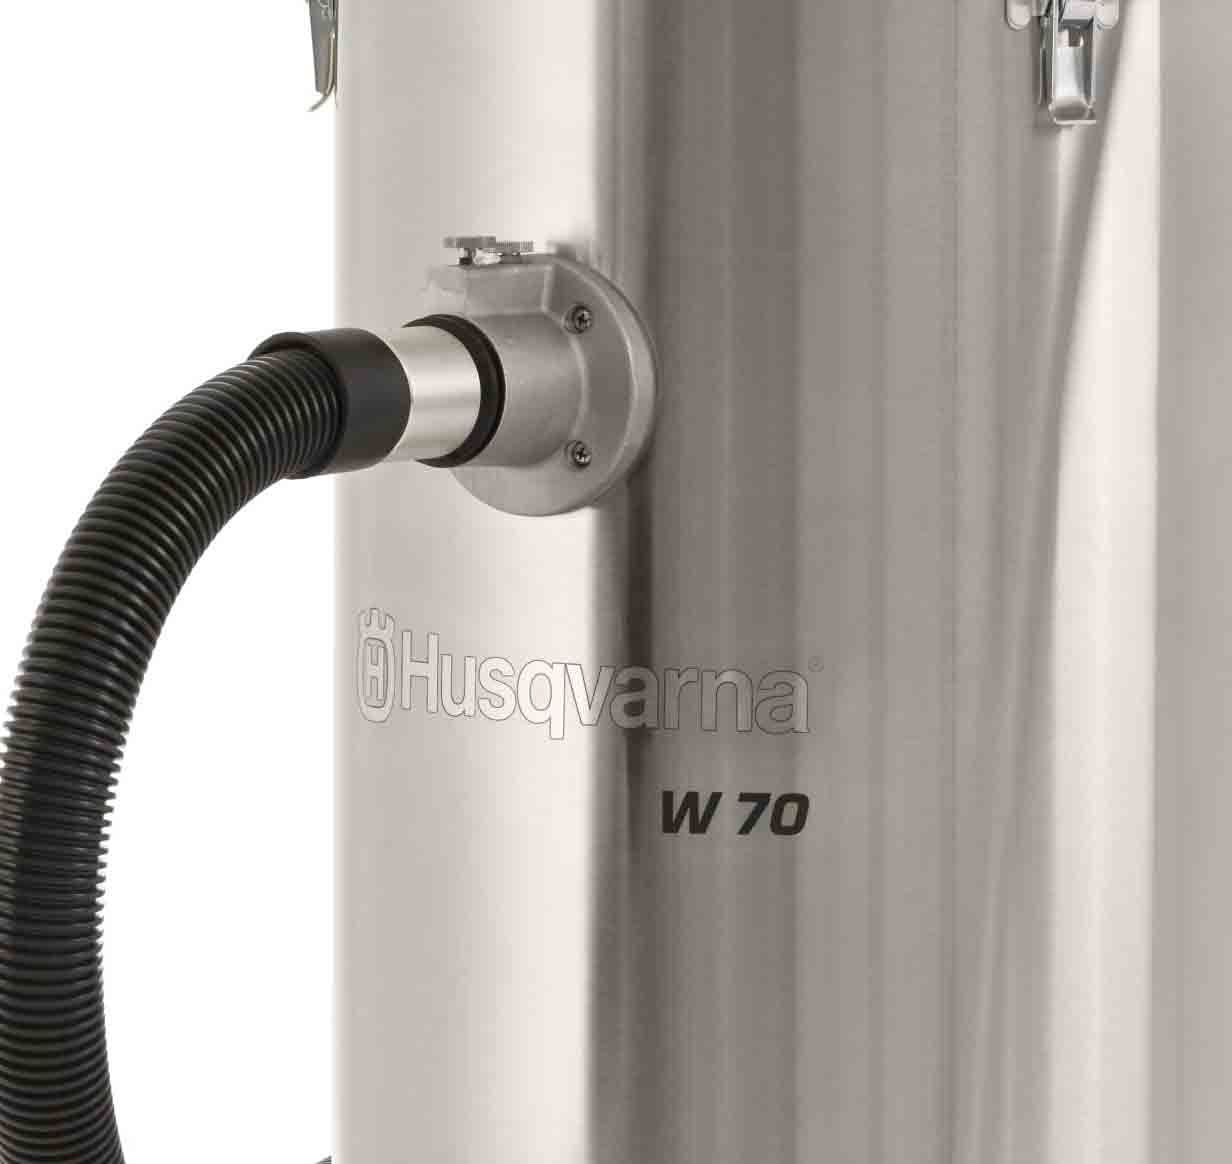 Husqvarna W70 Wet & Slurry Vacuum